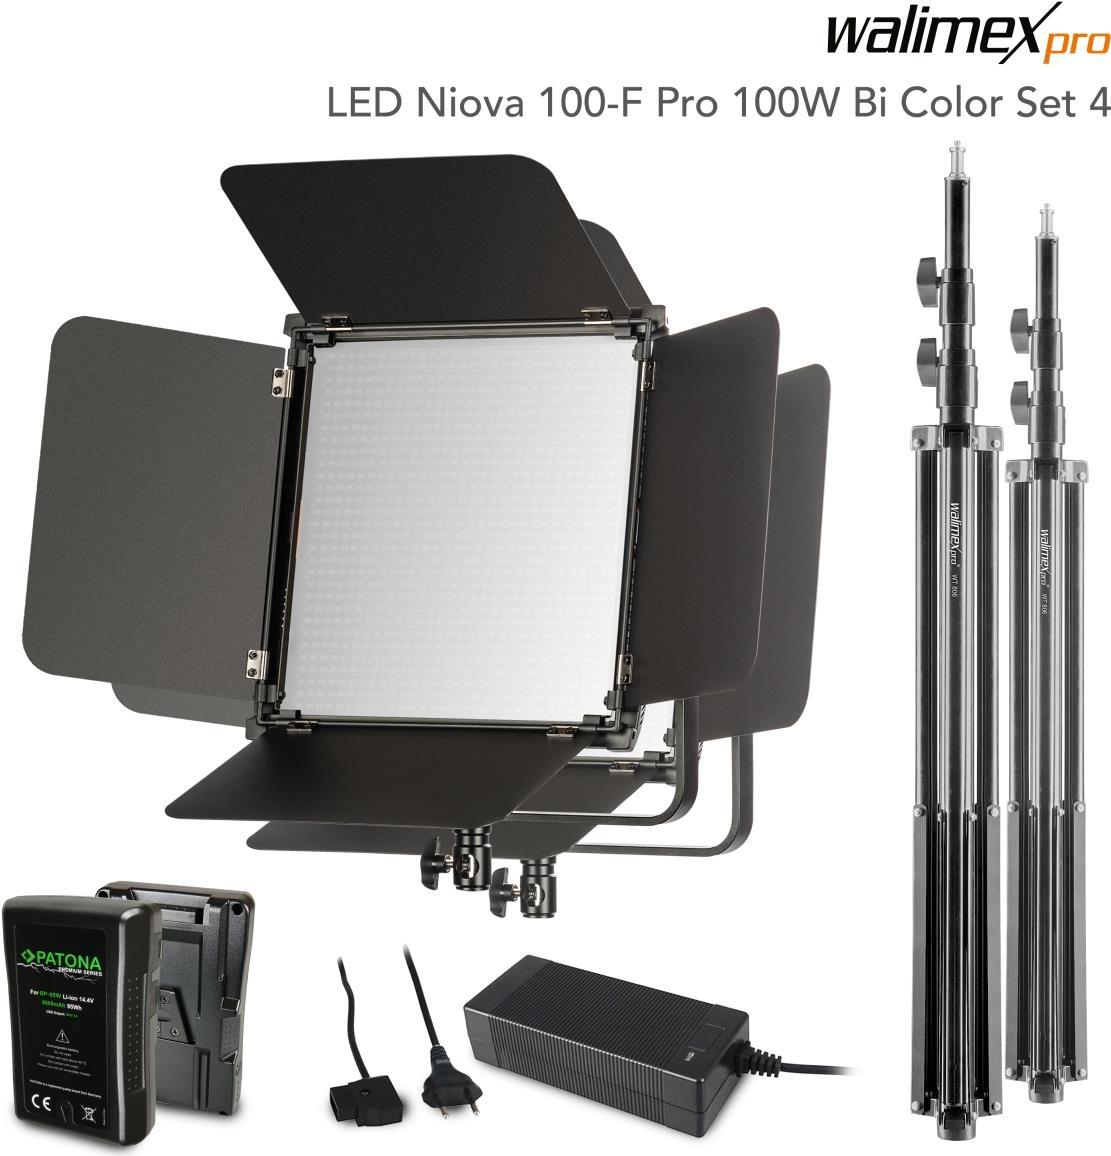 WALSER Walimex pro LED Niova 100-F Pro 100W Bi Color Set4 (23219)